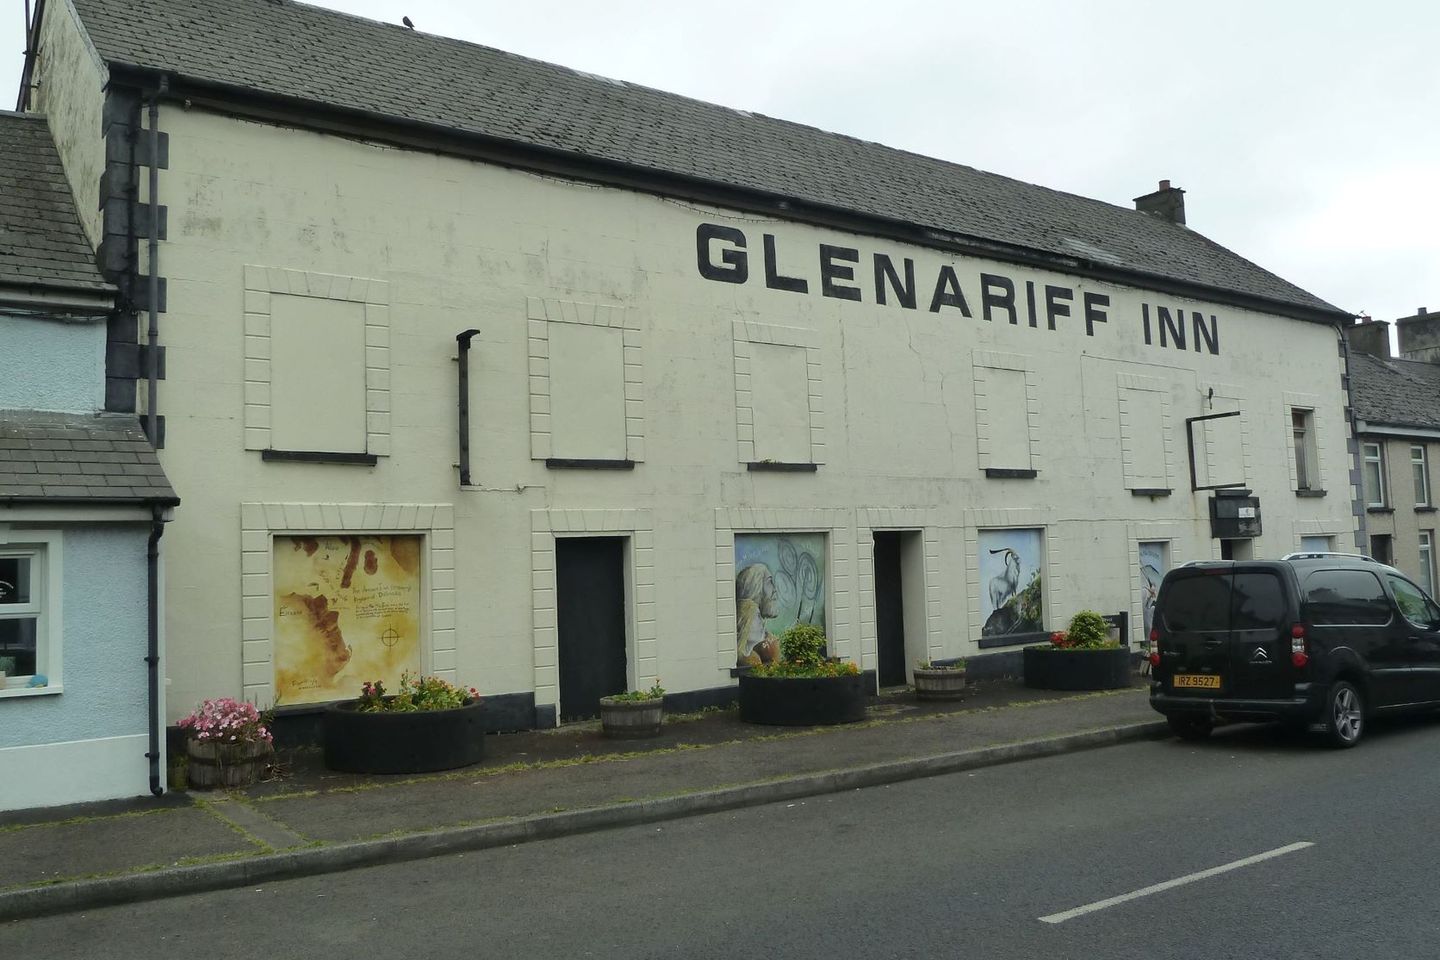 Glenariffe Inn, 16-18 Main Street, Waterfoot, Ballymena, Co. Antrim